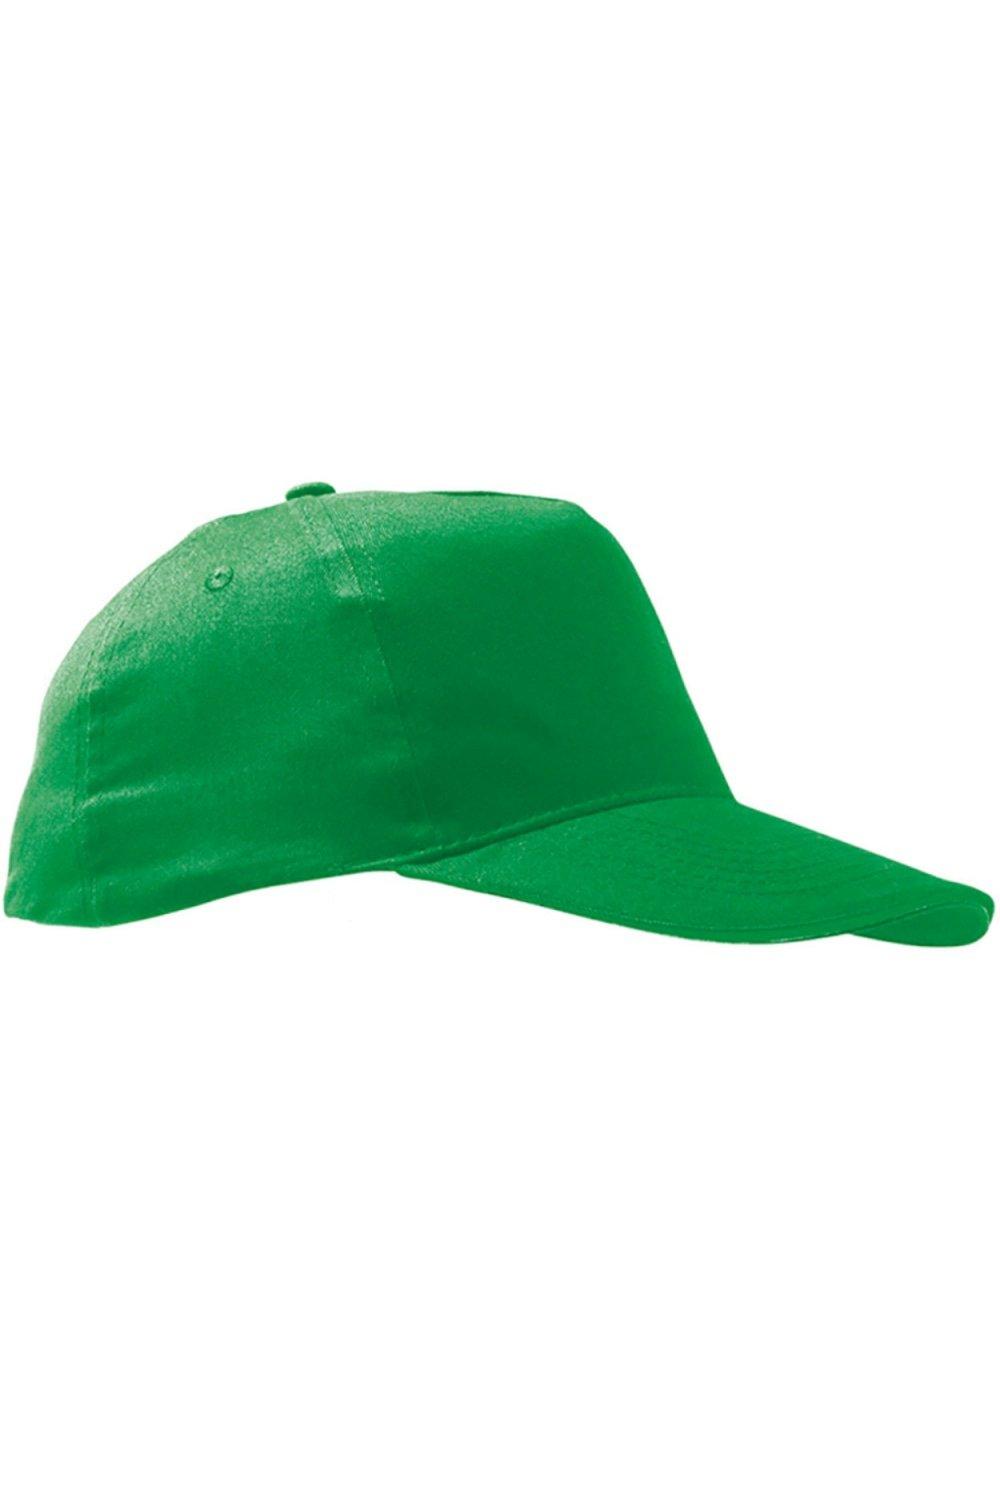 SOL'S Sunny Baseball Cap|green